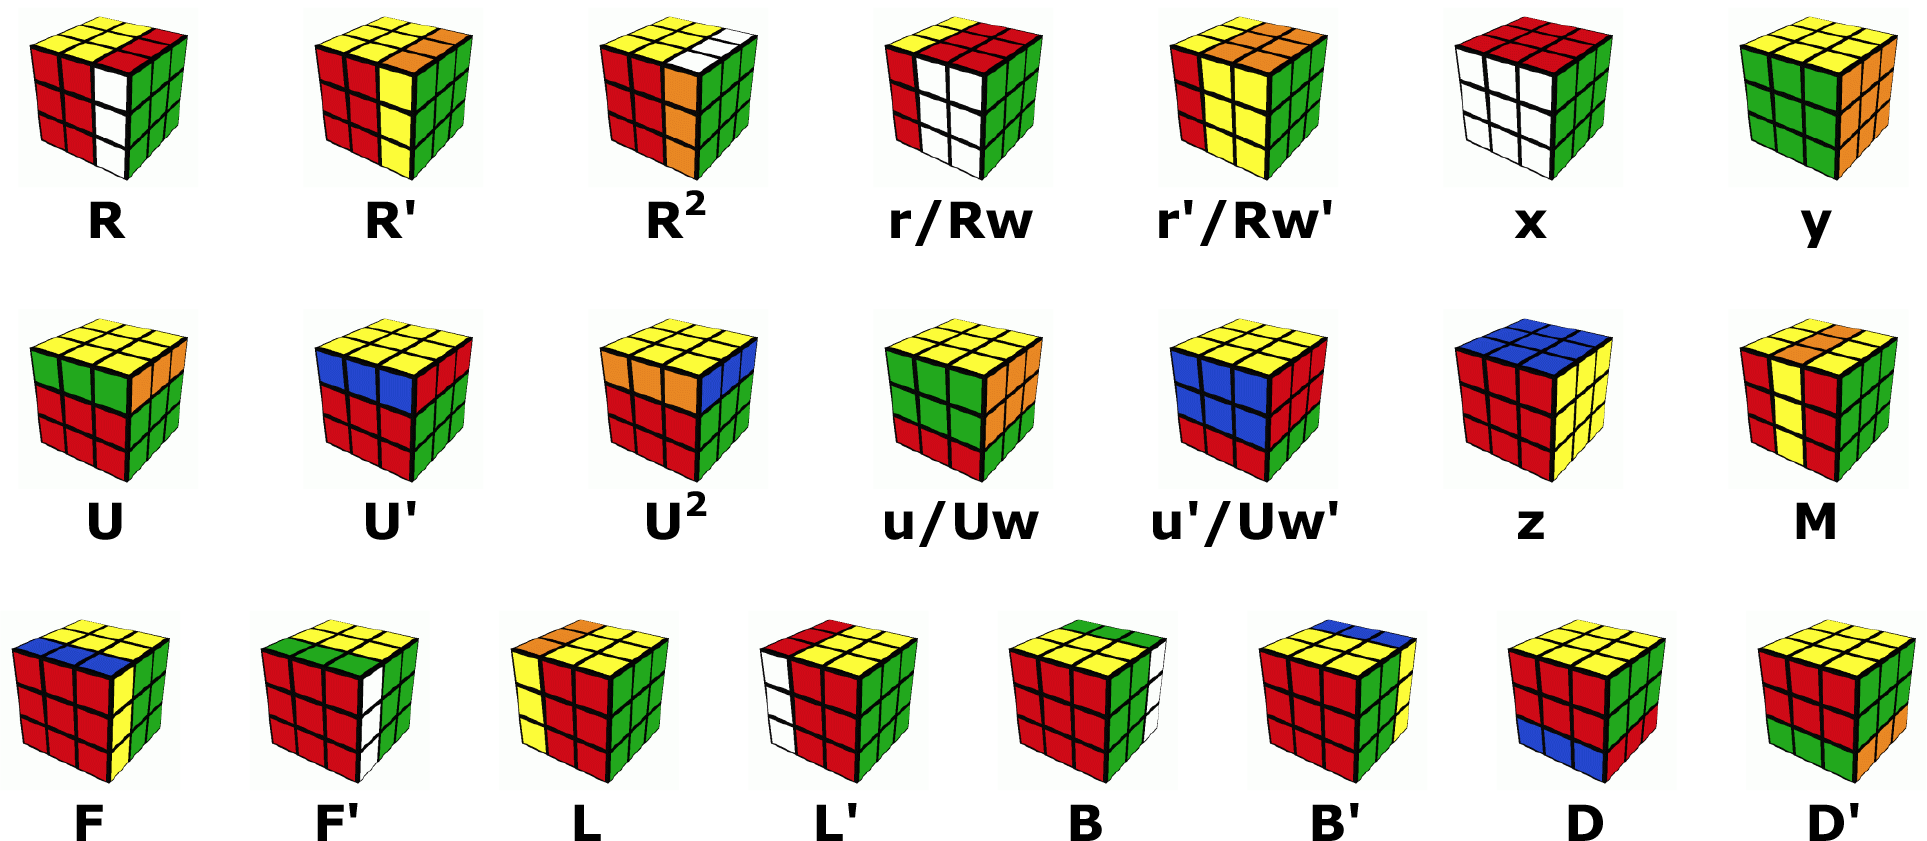 M2M Day 69 Decoding Rubik s Cube algorithms  Max Deutsch 